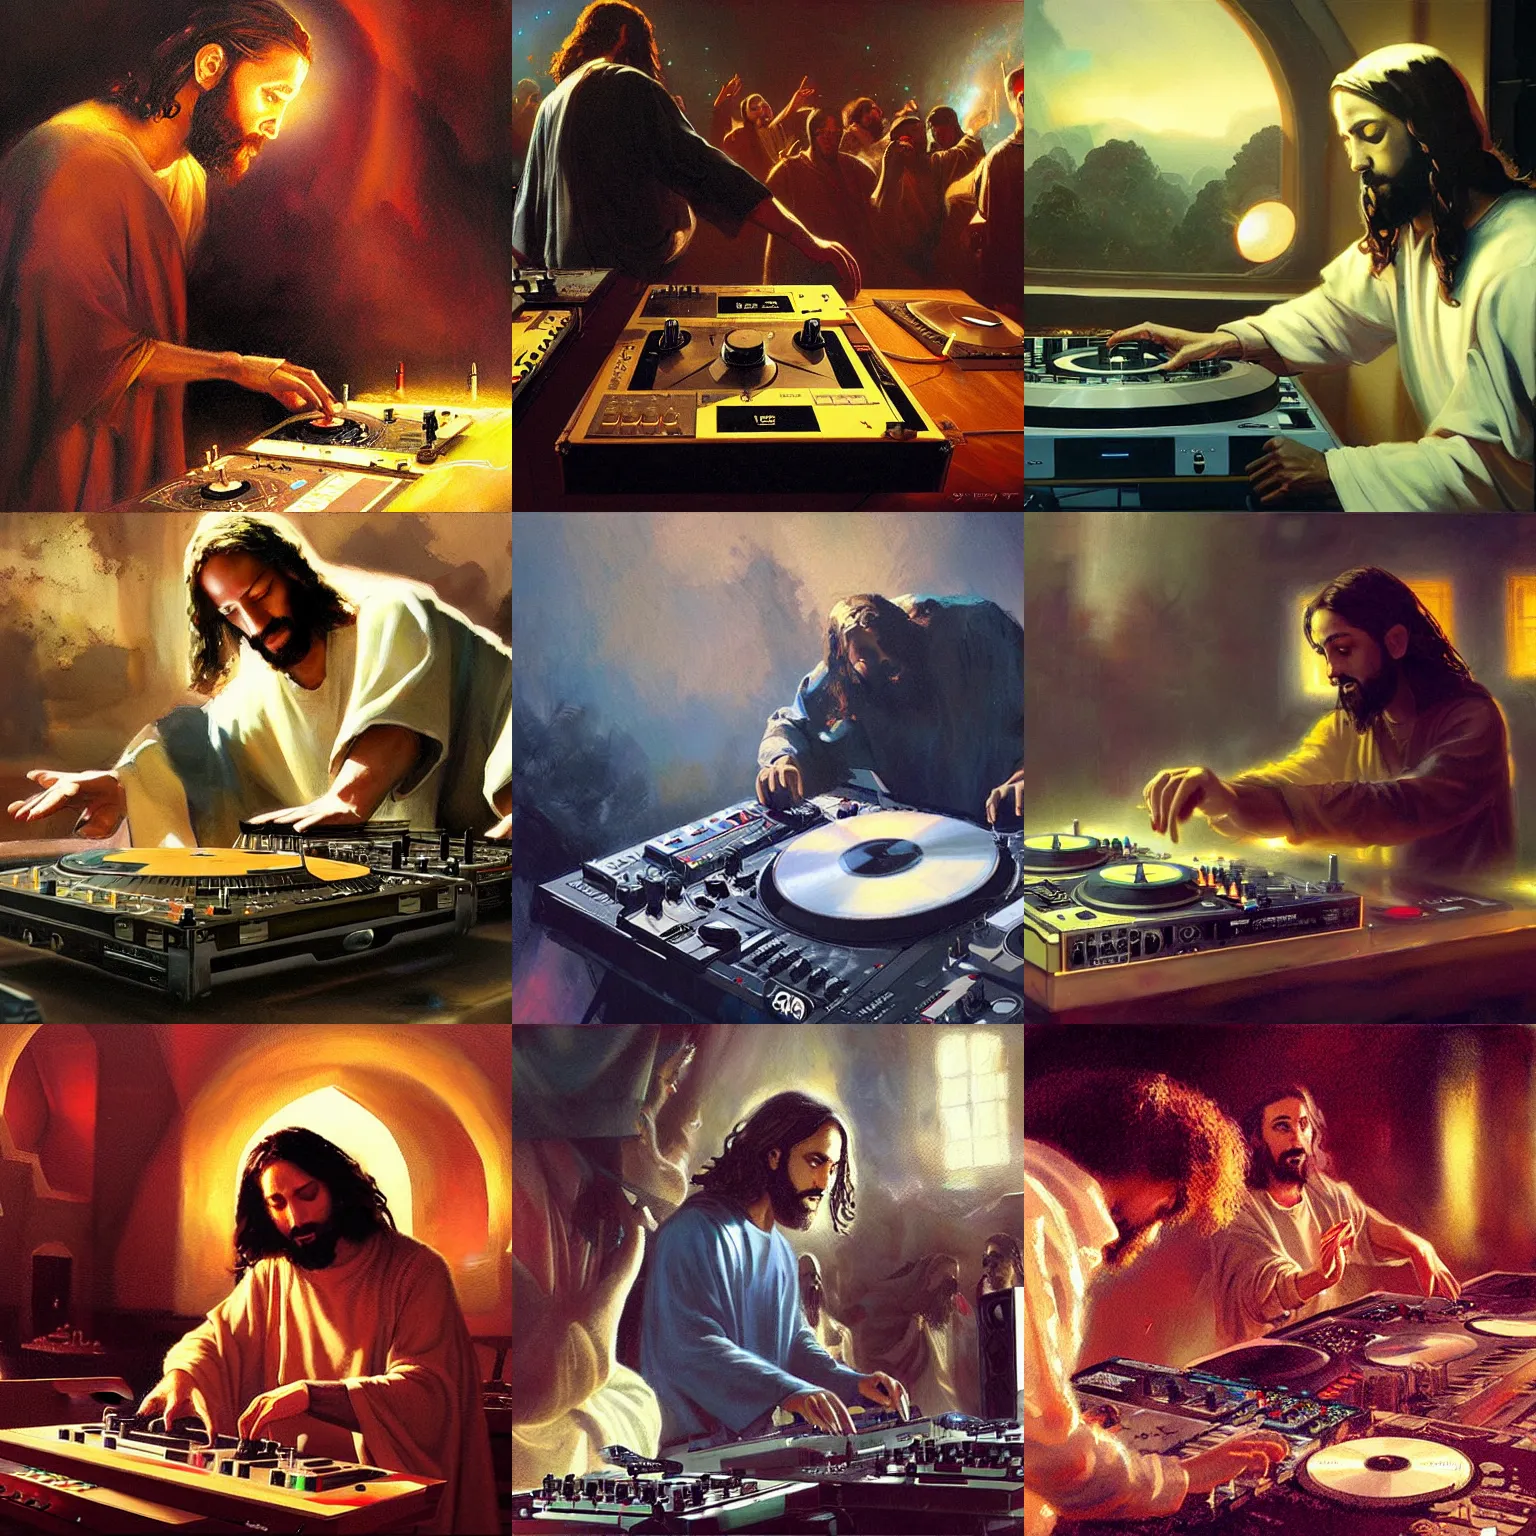 Prompt: a painting of jesus DJing with DJ turntables, craig mullins, greg rutkowski